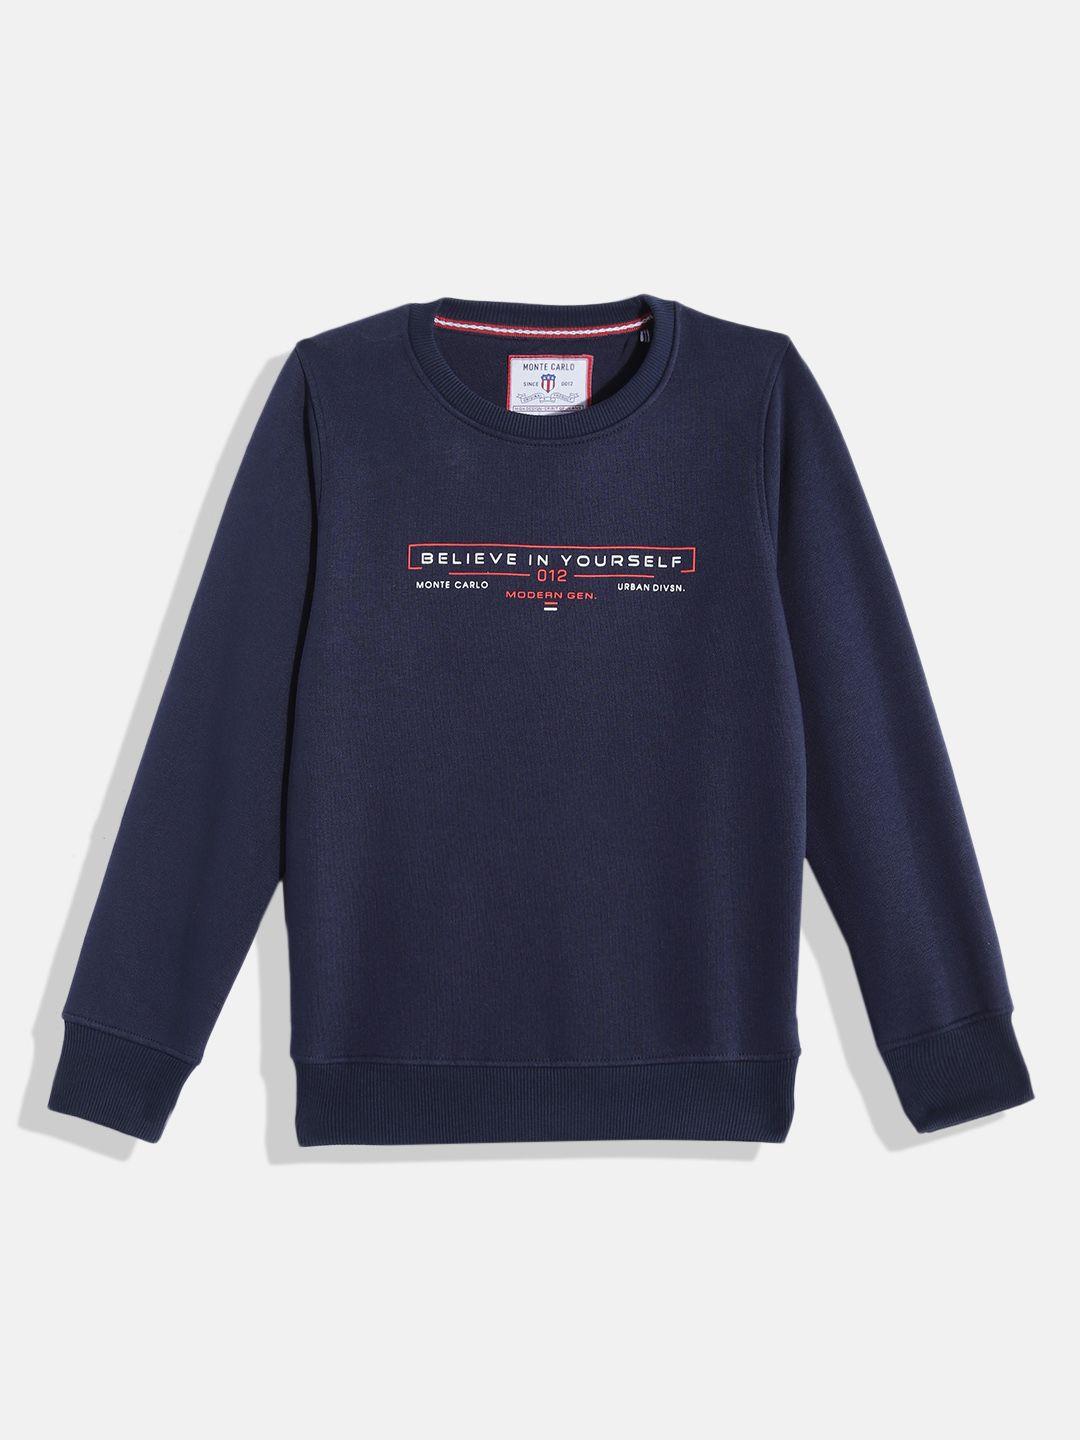 monte carlo boys navy blue typography printed sweatshirt